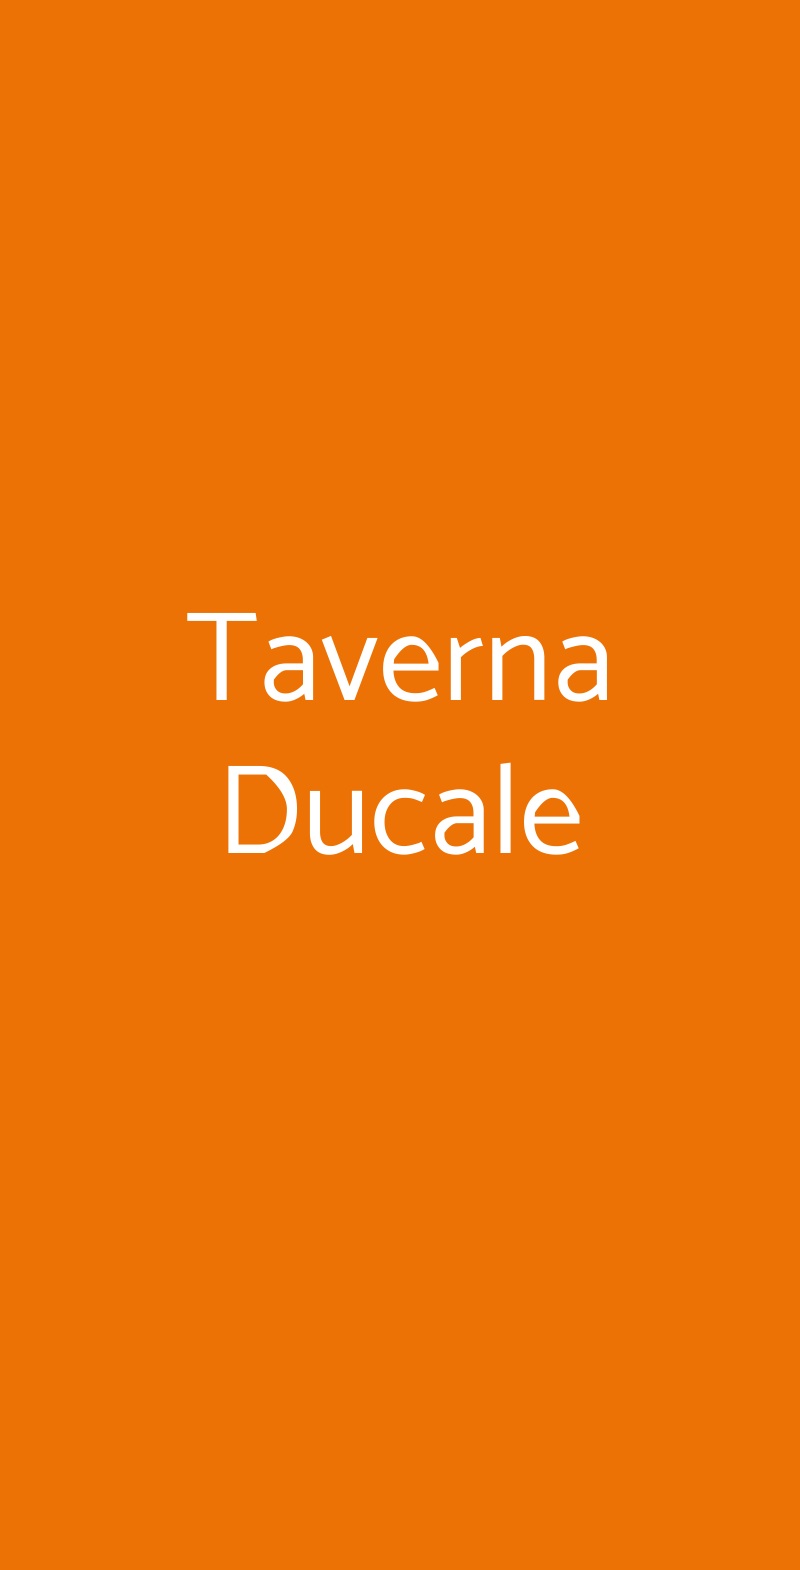 Taverna Ducale Caramanico Terme menù 1 pagina